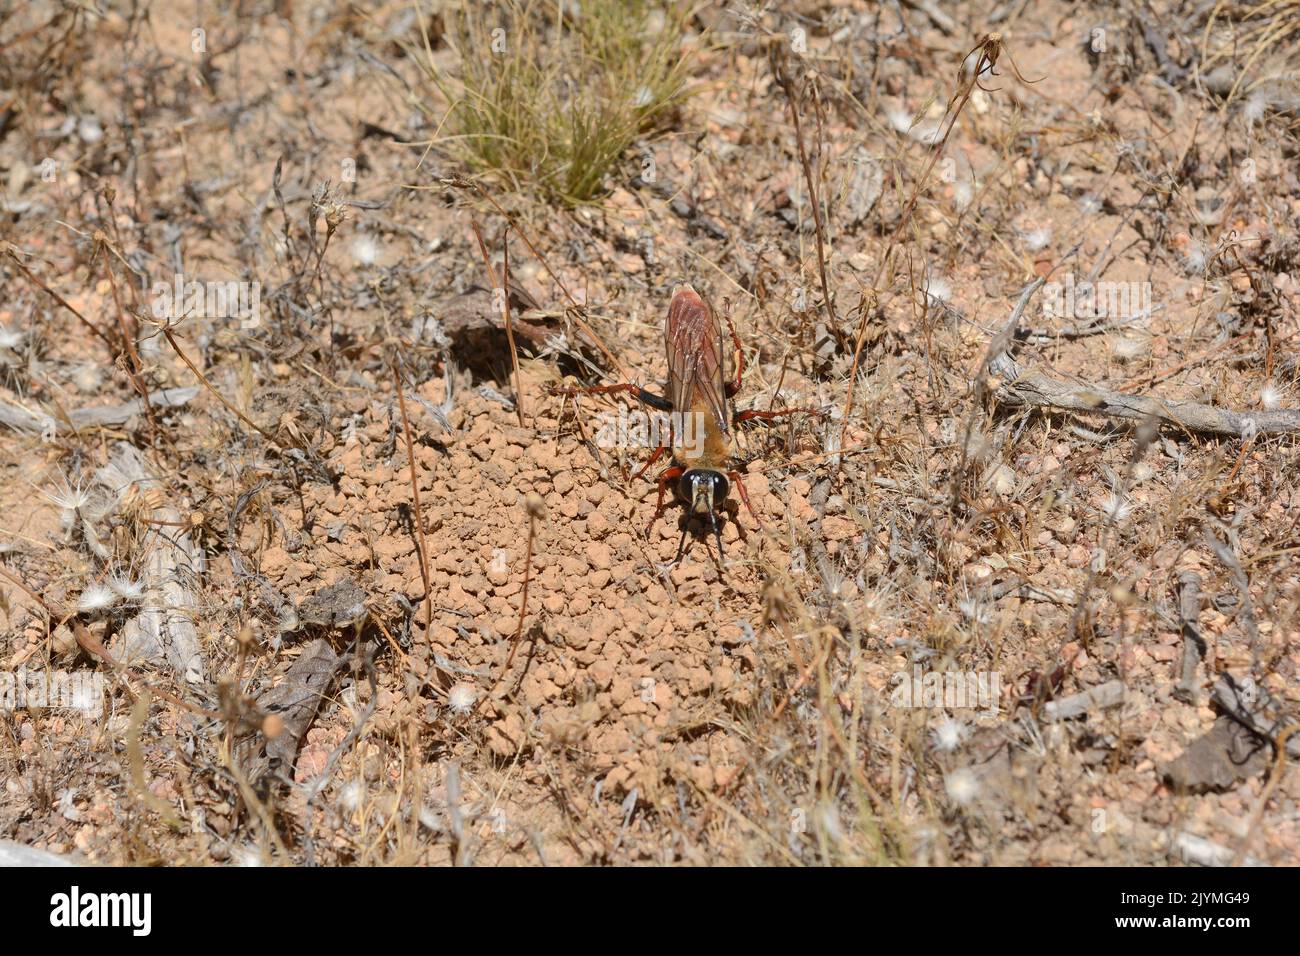 Avispa gallo (Sphex latreillei), Hymenoptera Sphecidae, male waiting for a female to come out of her burrow to mate, Reserva Nacional Los Ruiles, Maule Region, Chile Stock Photo